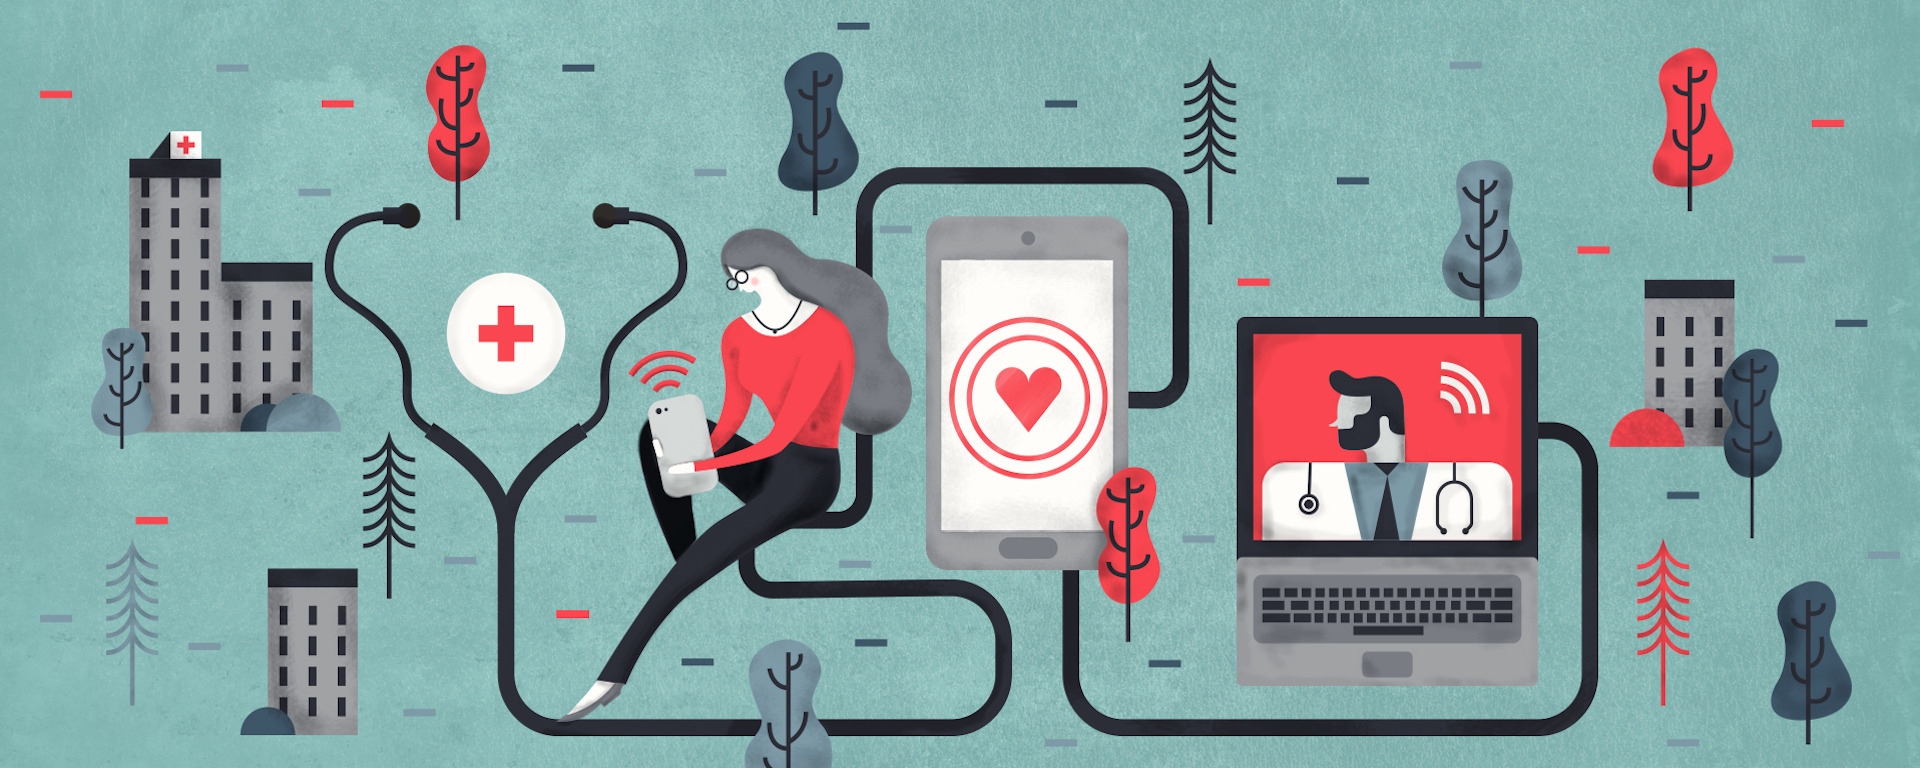 Healthcare apps market - illustration by Mark Araya